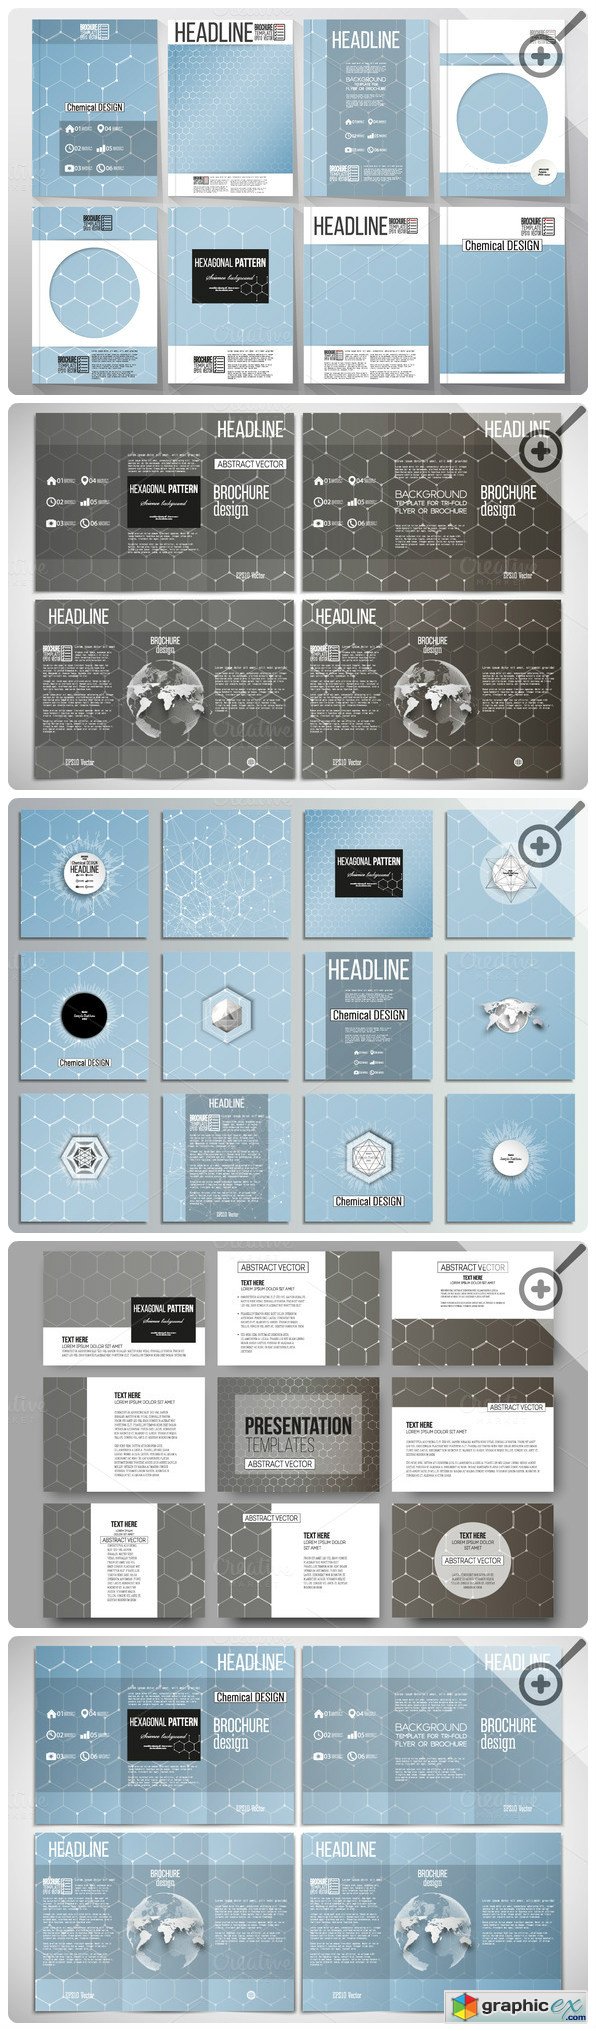 Hexagonal design chemistry templates